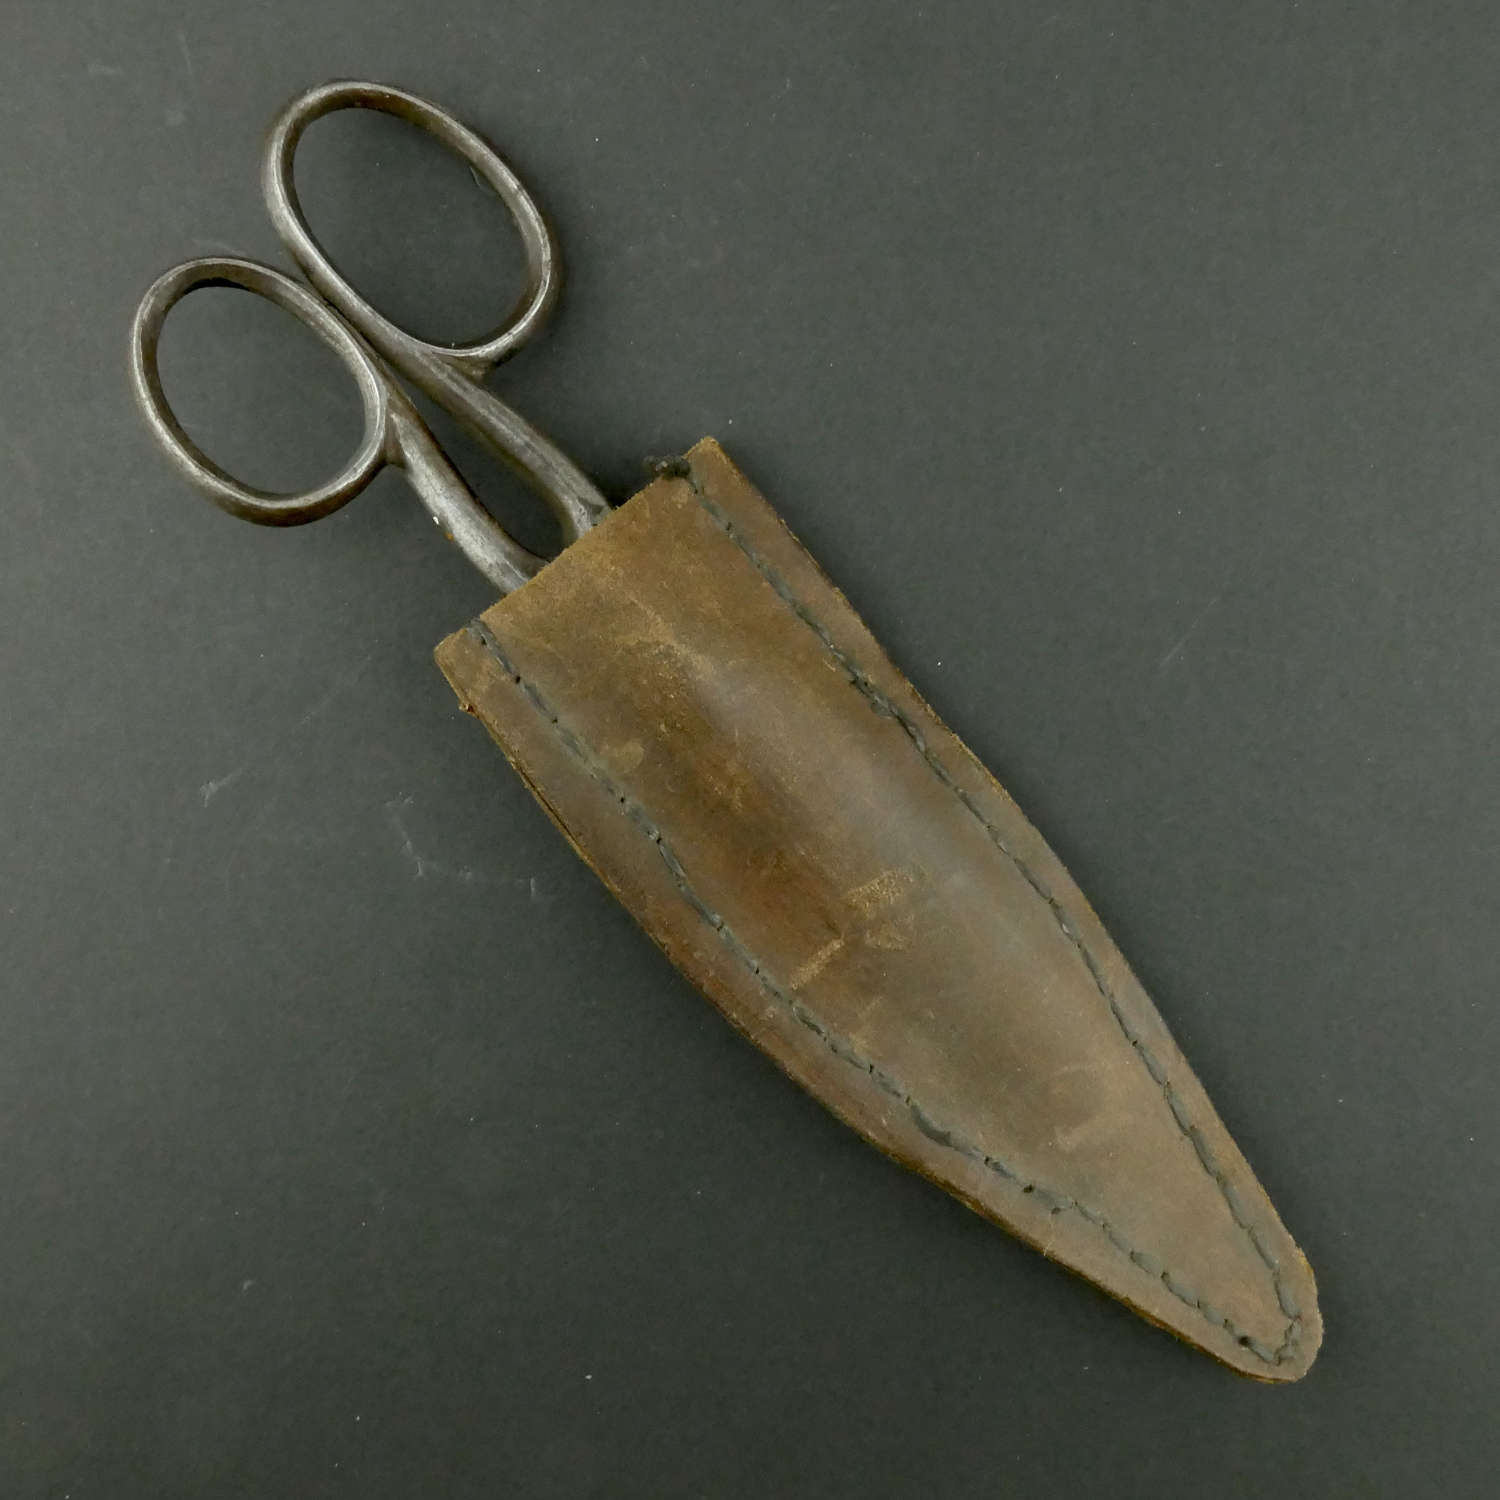 WW1 military issue scissors